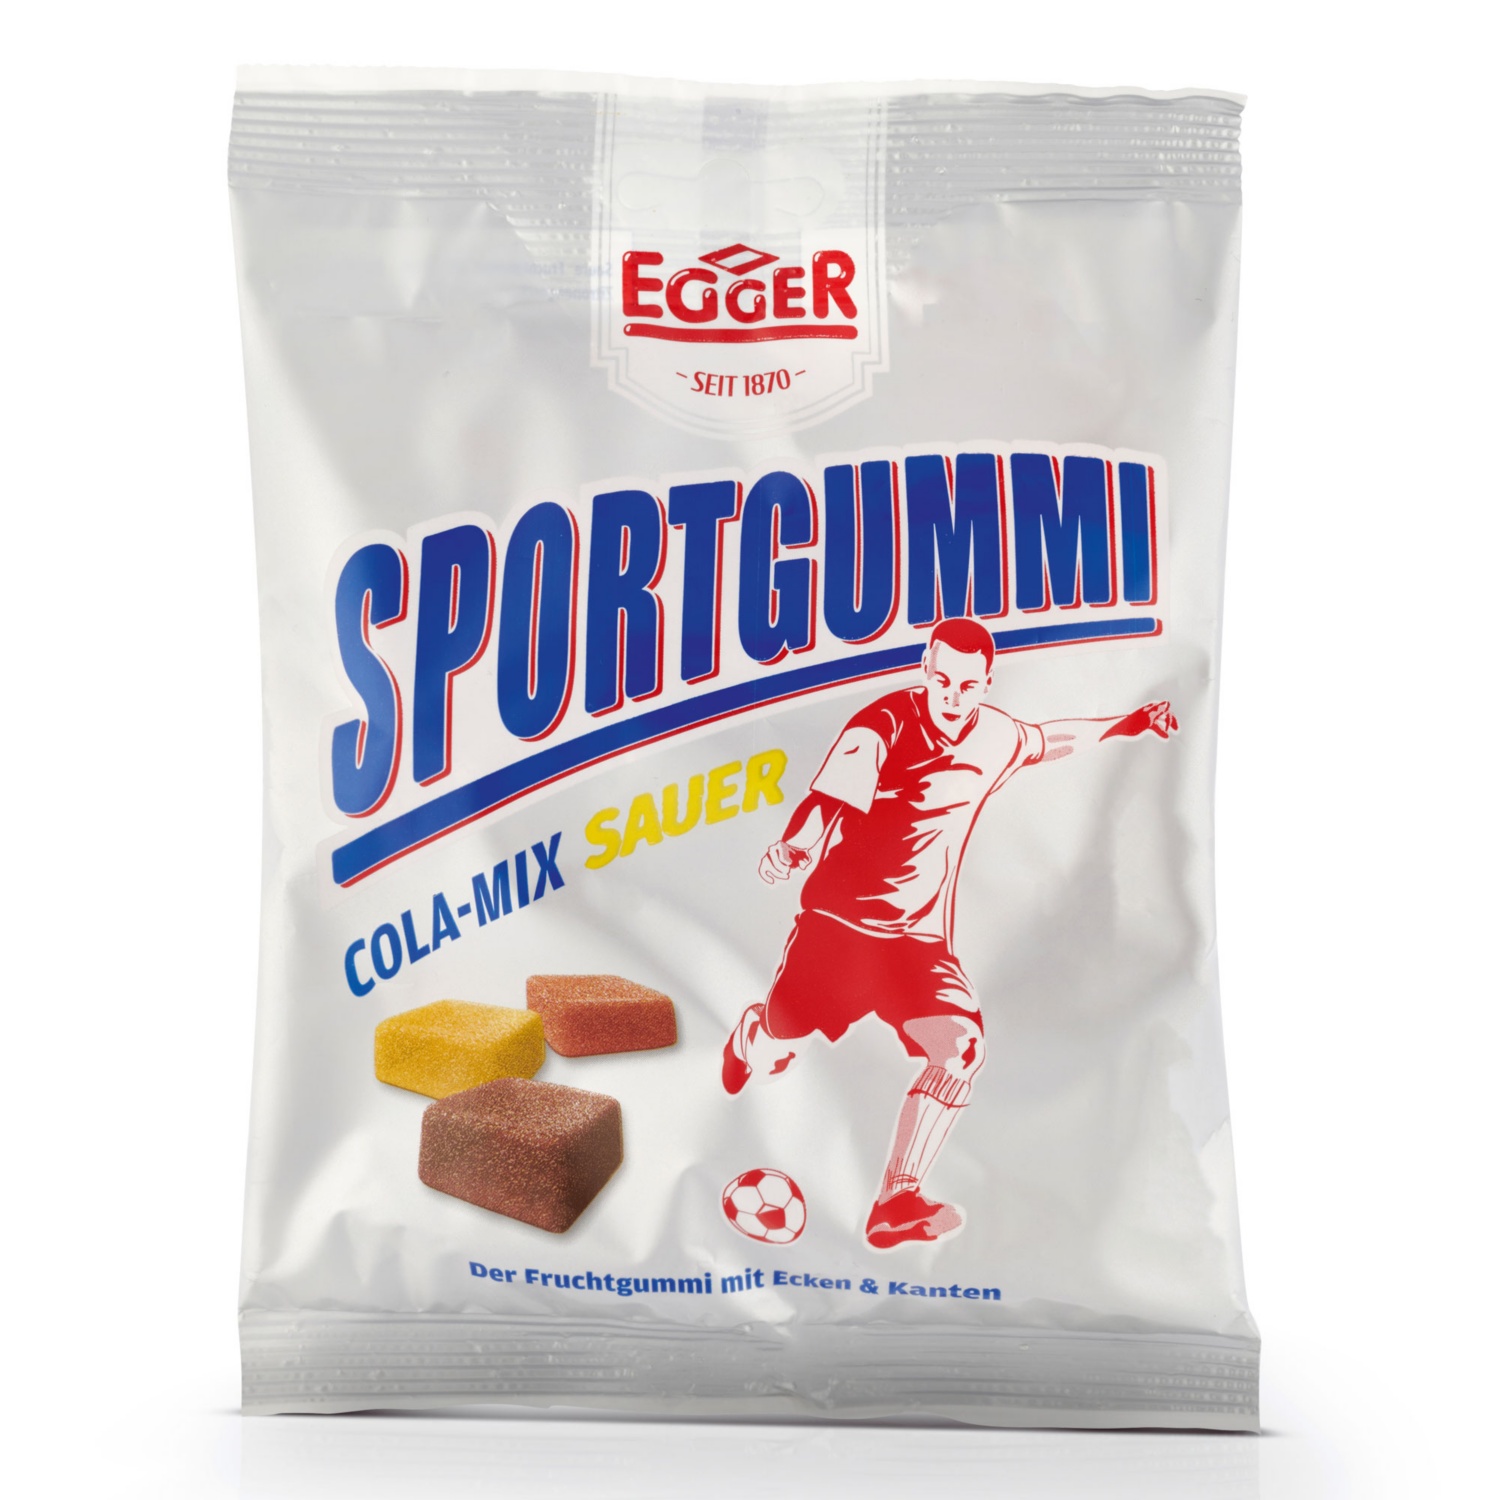 EGGER Sportgummi, Cola-Mix sauer